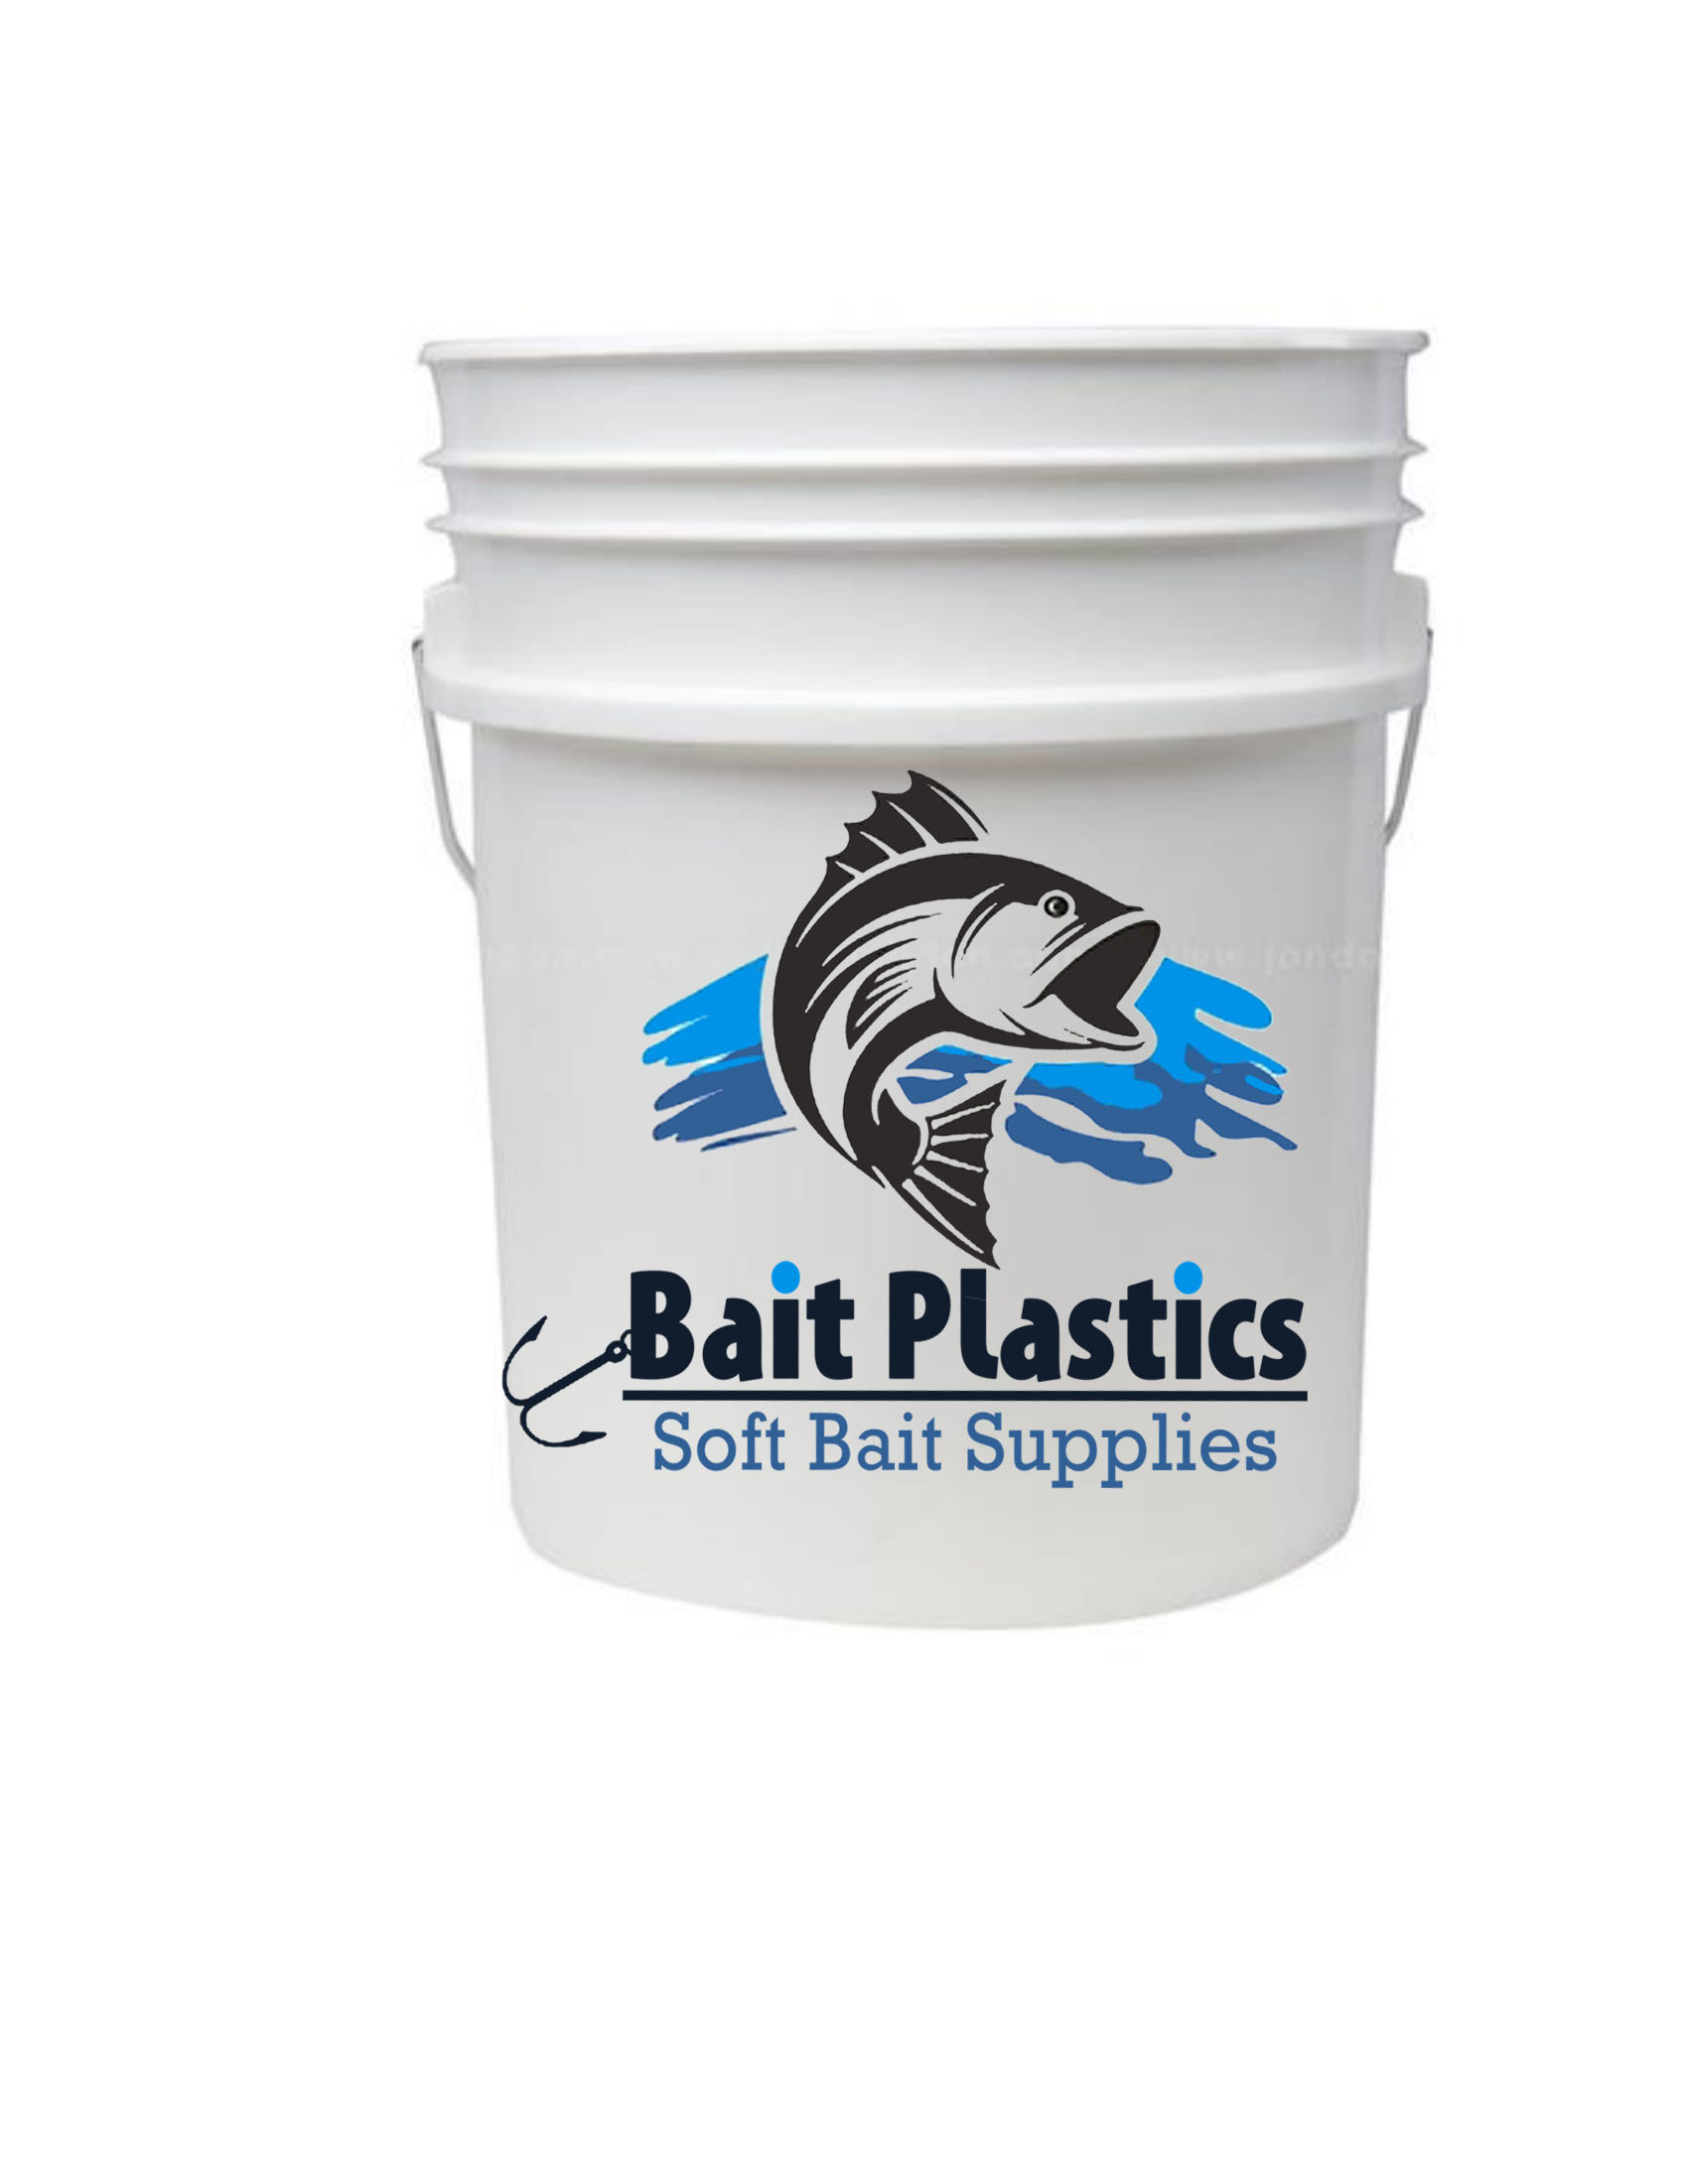 Hard Liquid plastic for bait making